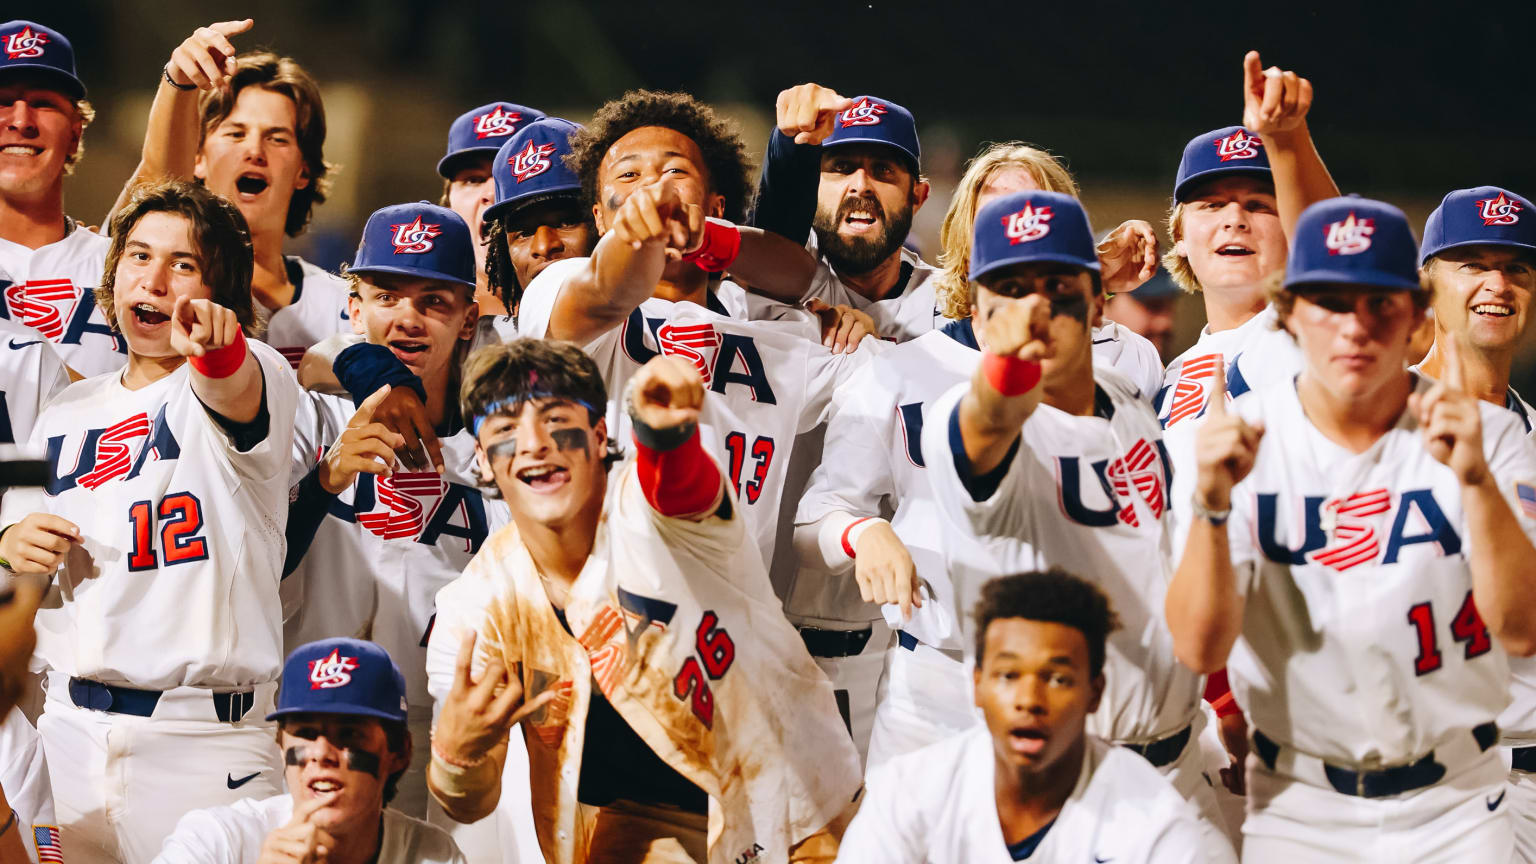 Béisbol: USA gana su séptimo título mundial en categoría “Cadetes’ en reñida final con Cuba